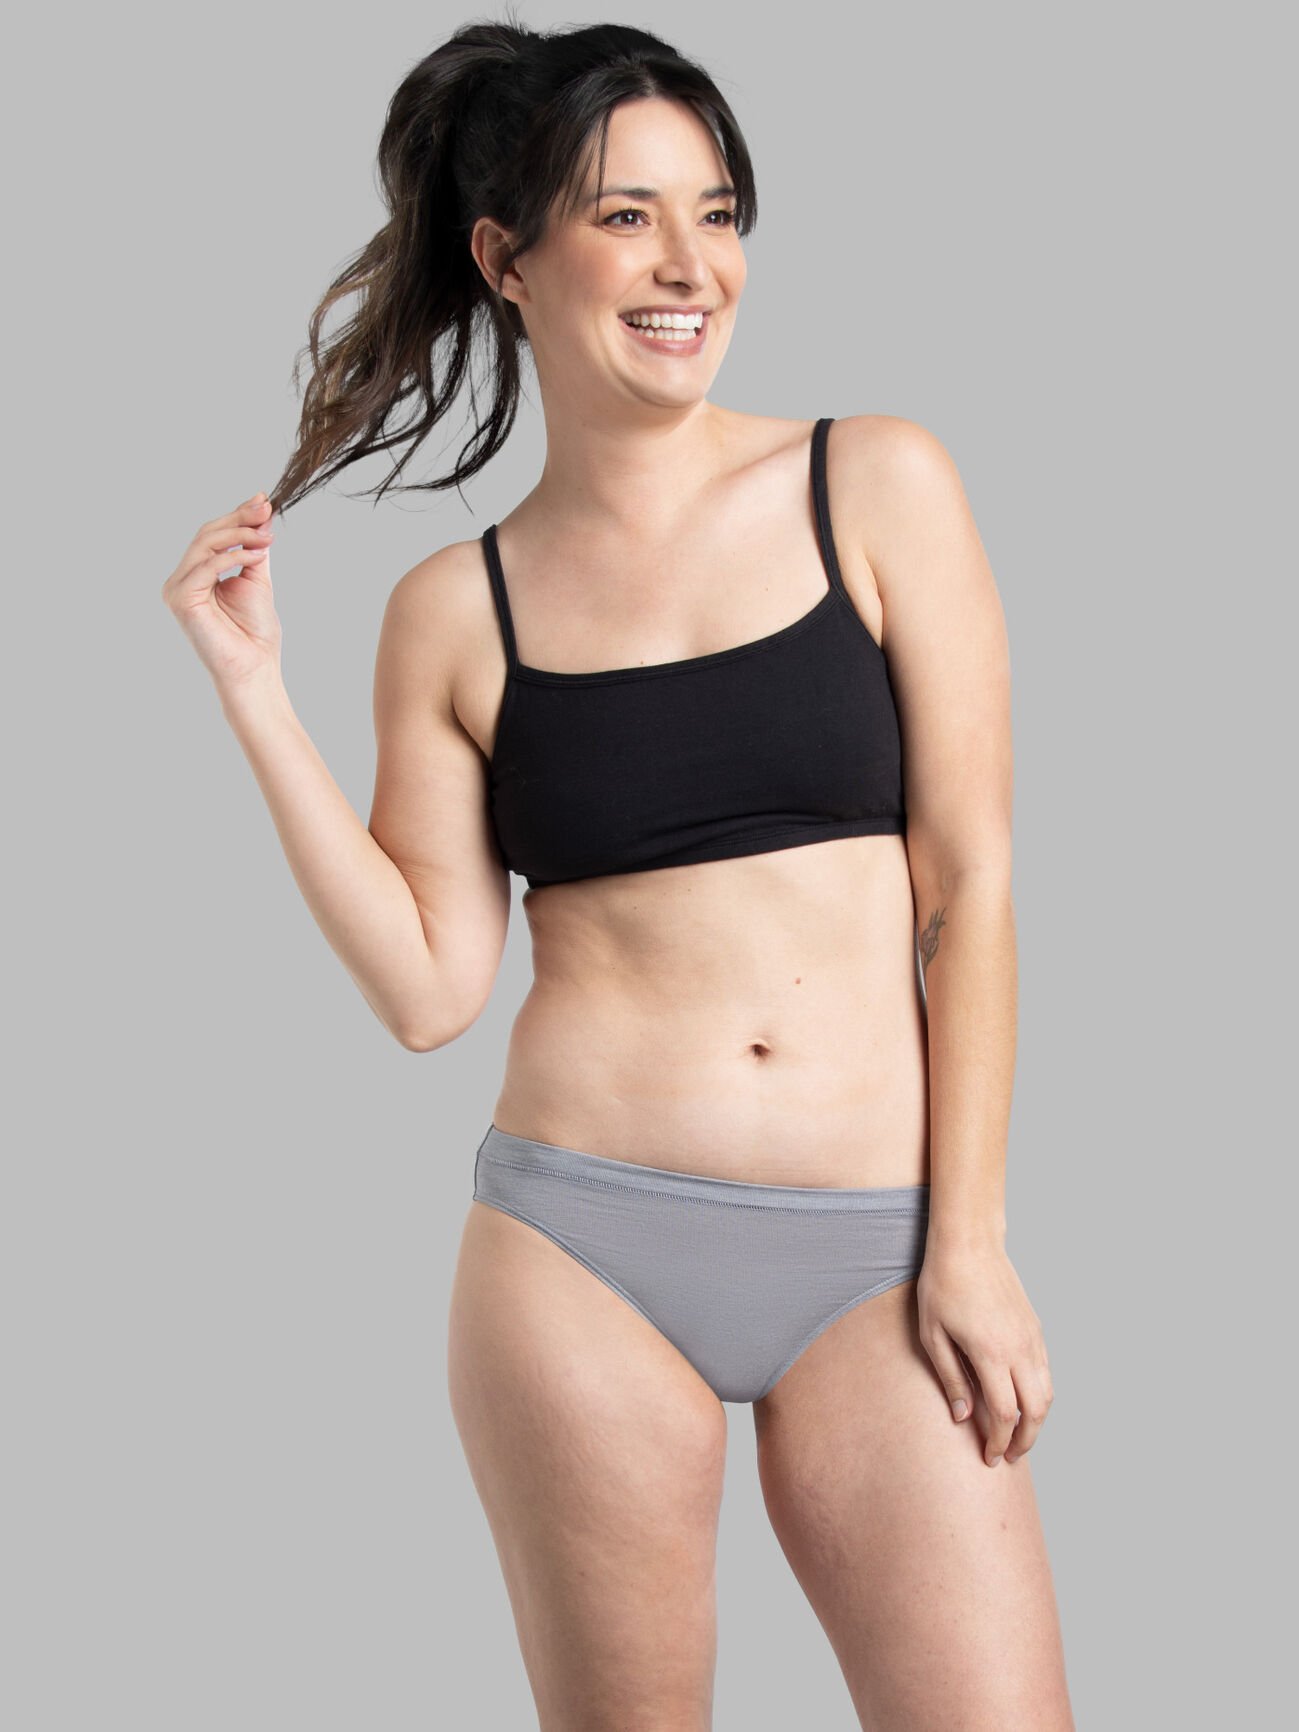 Women's Beyondsoft® Modal Bikini Panty, Assorted 12 pack ASSORTED